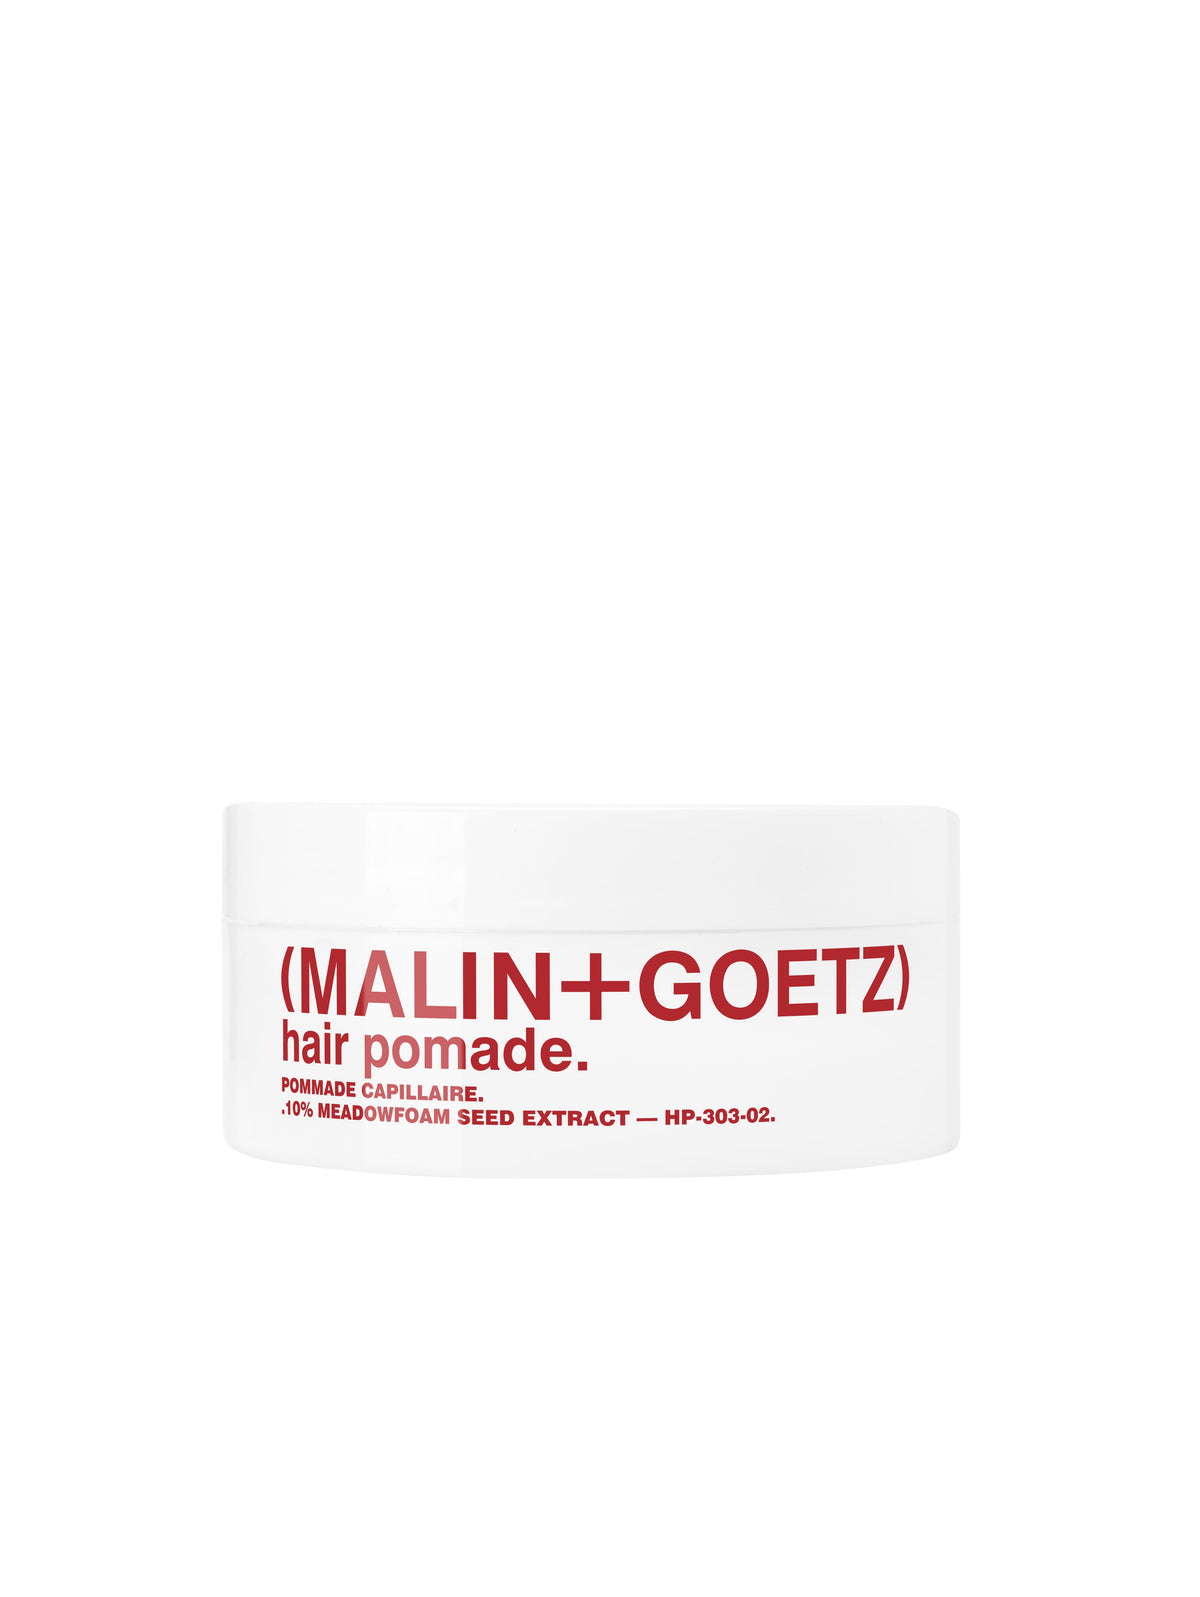 MALIN+GOETZ HAIR POMADE